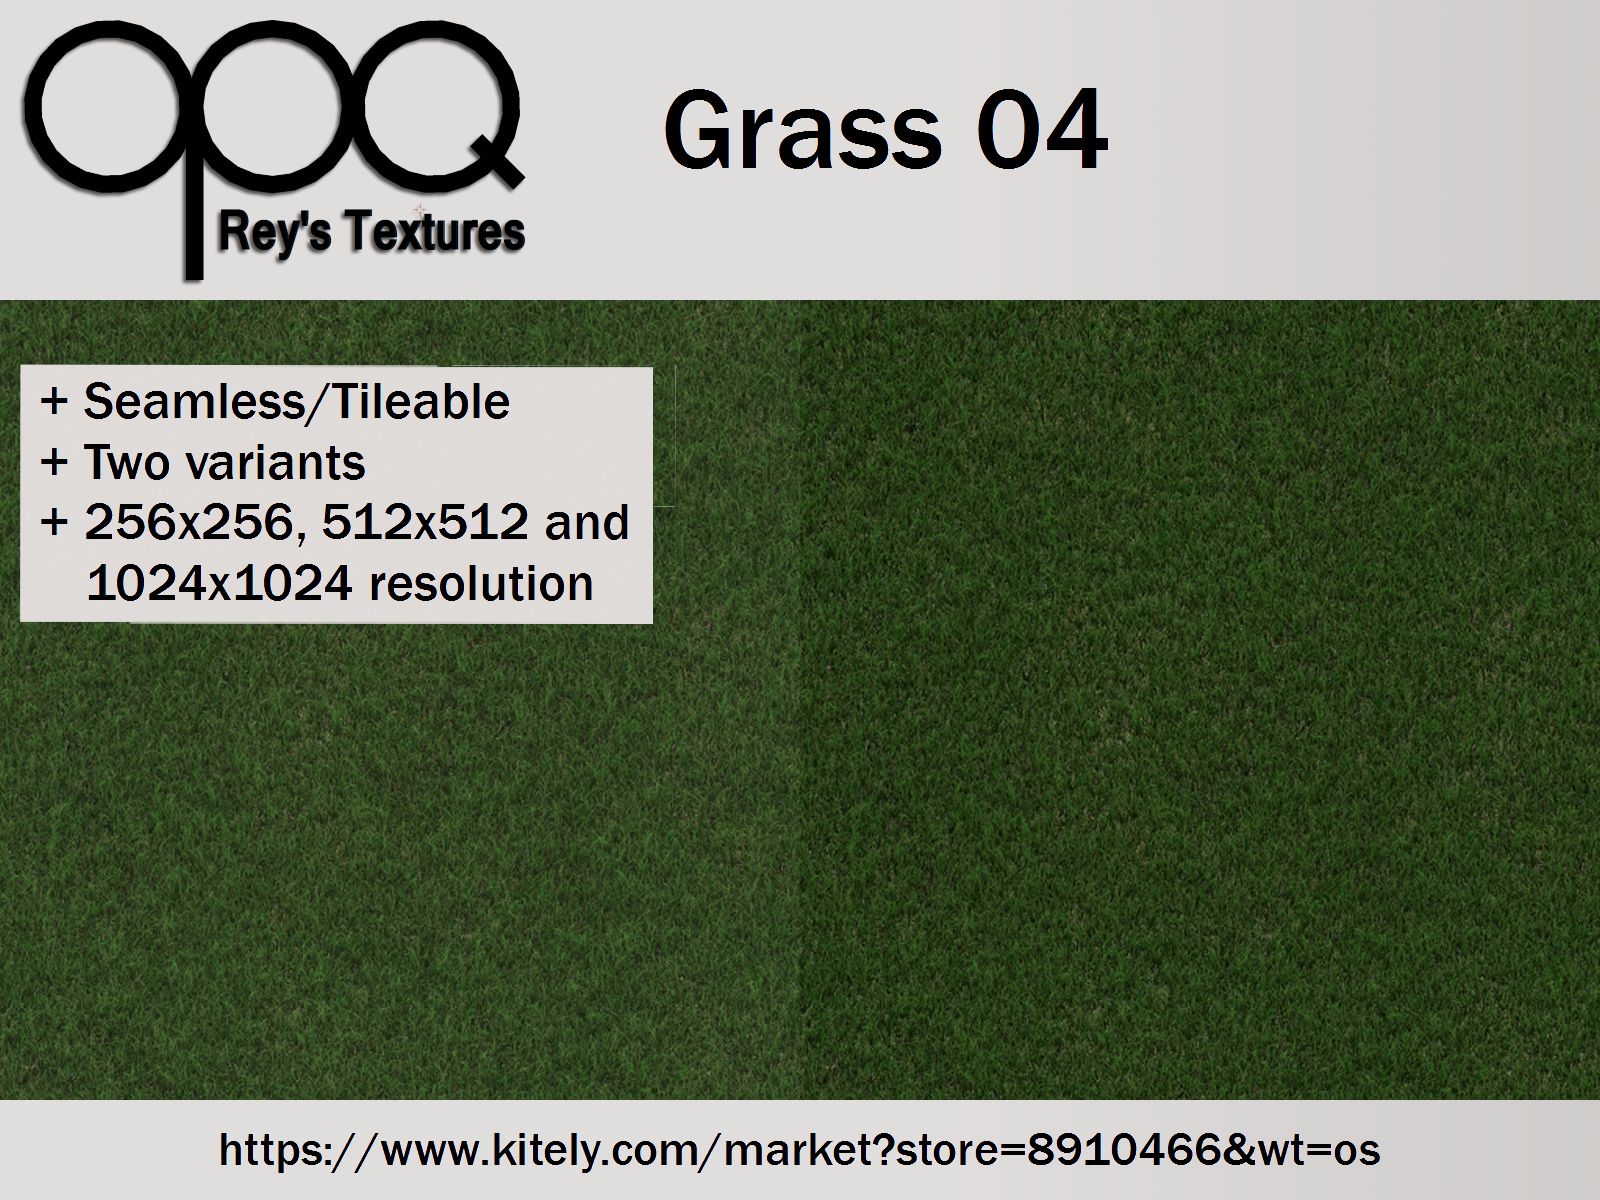 Rey's Grass 04 Poster Kitely.jpg